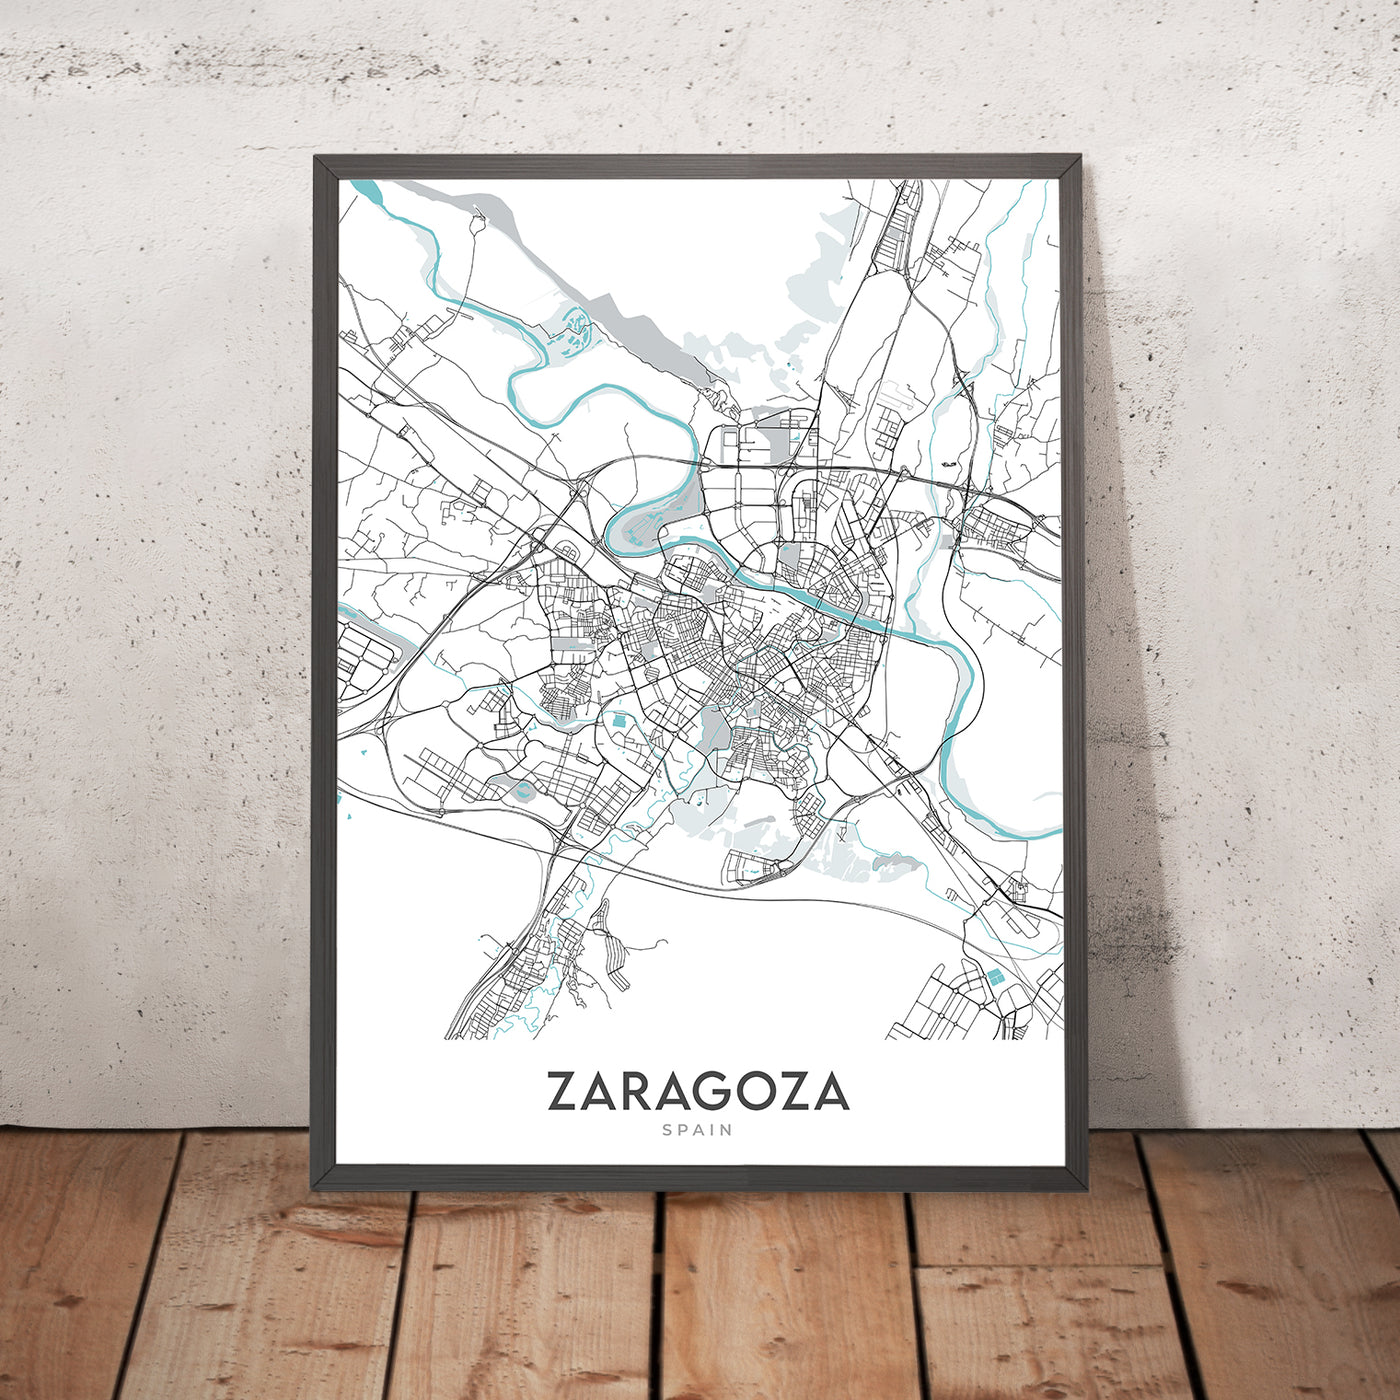 Modern City Map of Zaragoza, Spain: Basilica, Cathedral, Palace, River, University